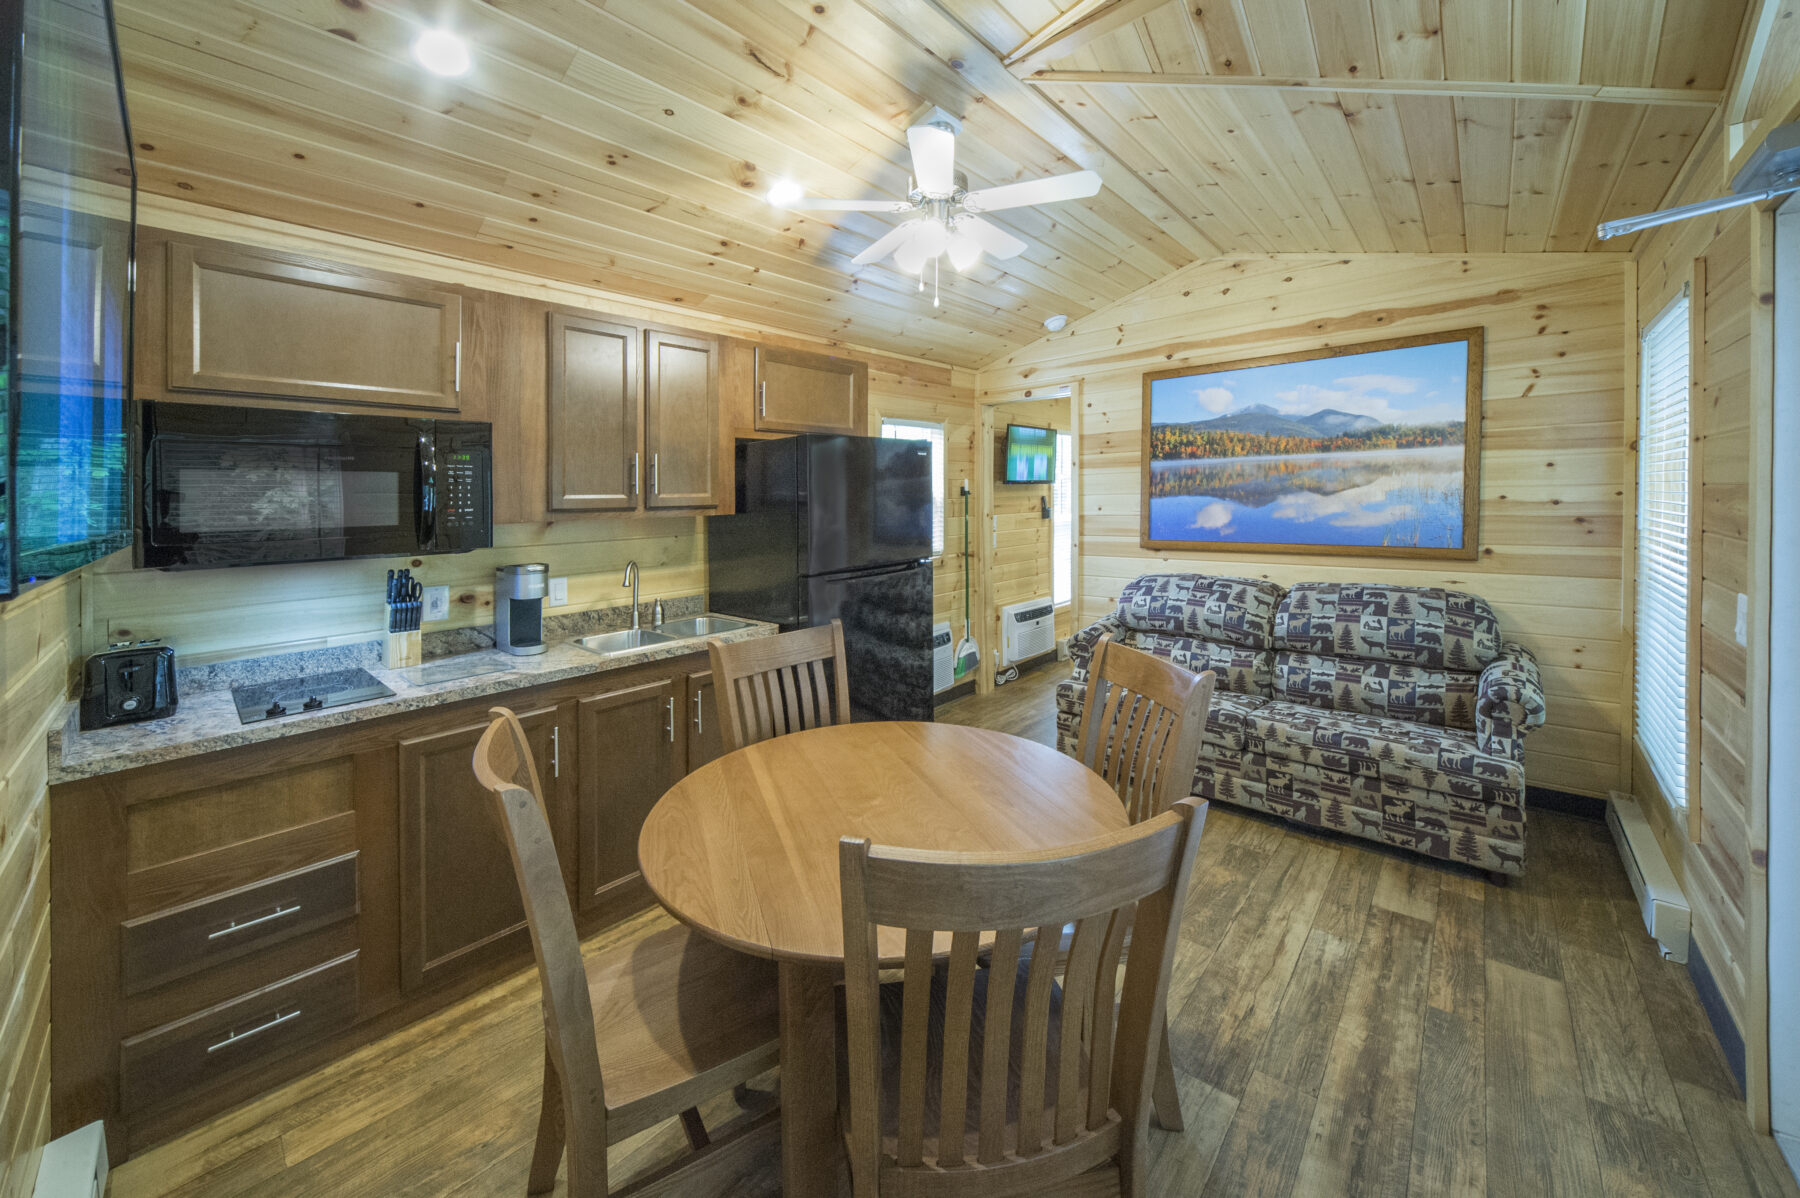 Kitchen/Livingroom area in cabins.